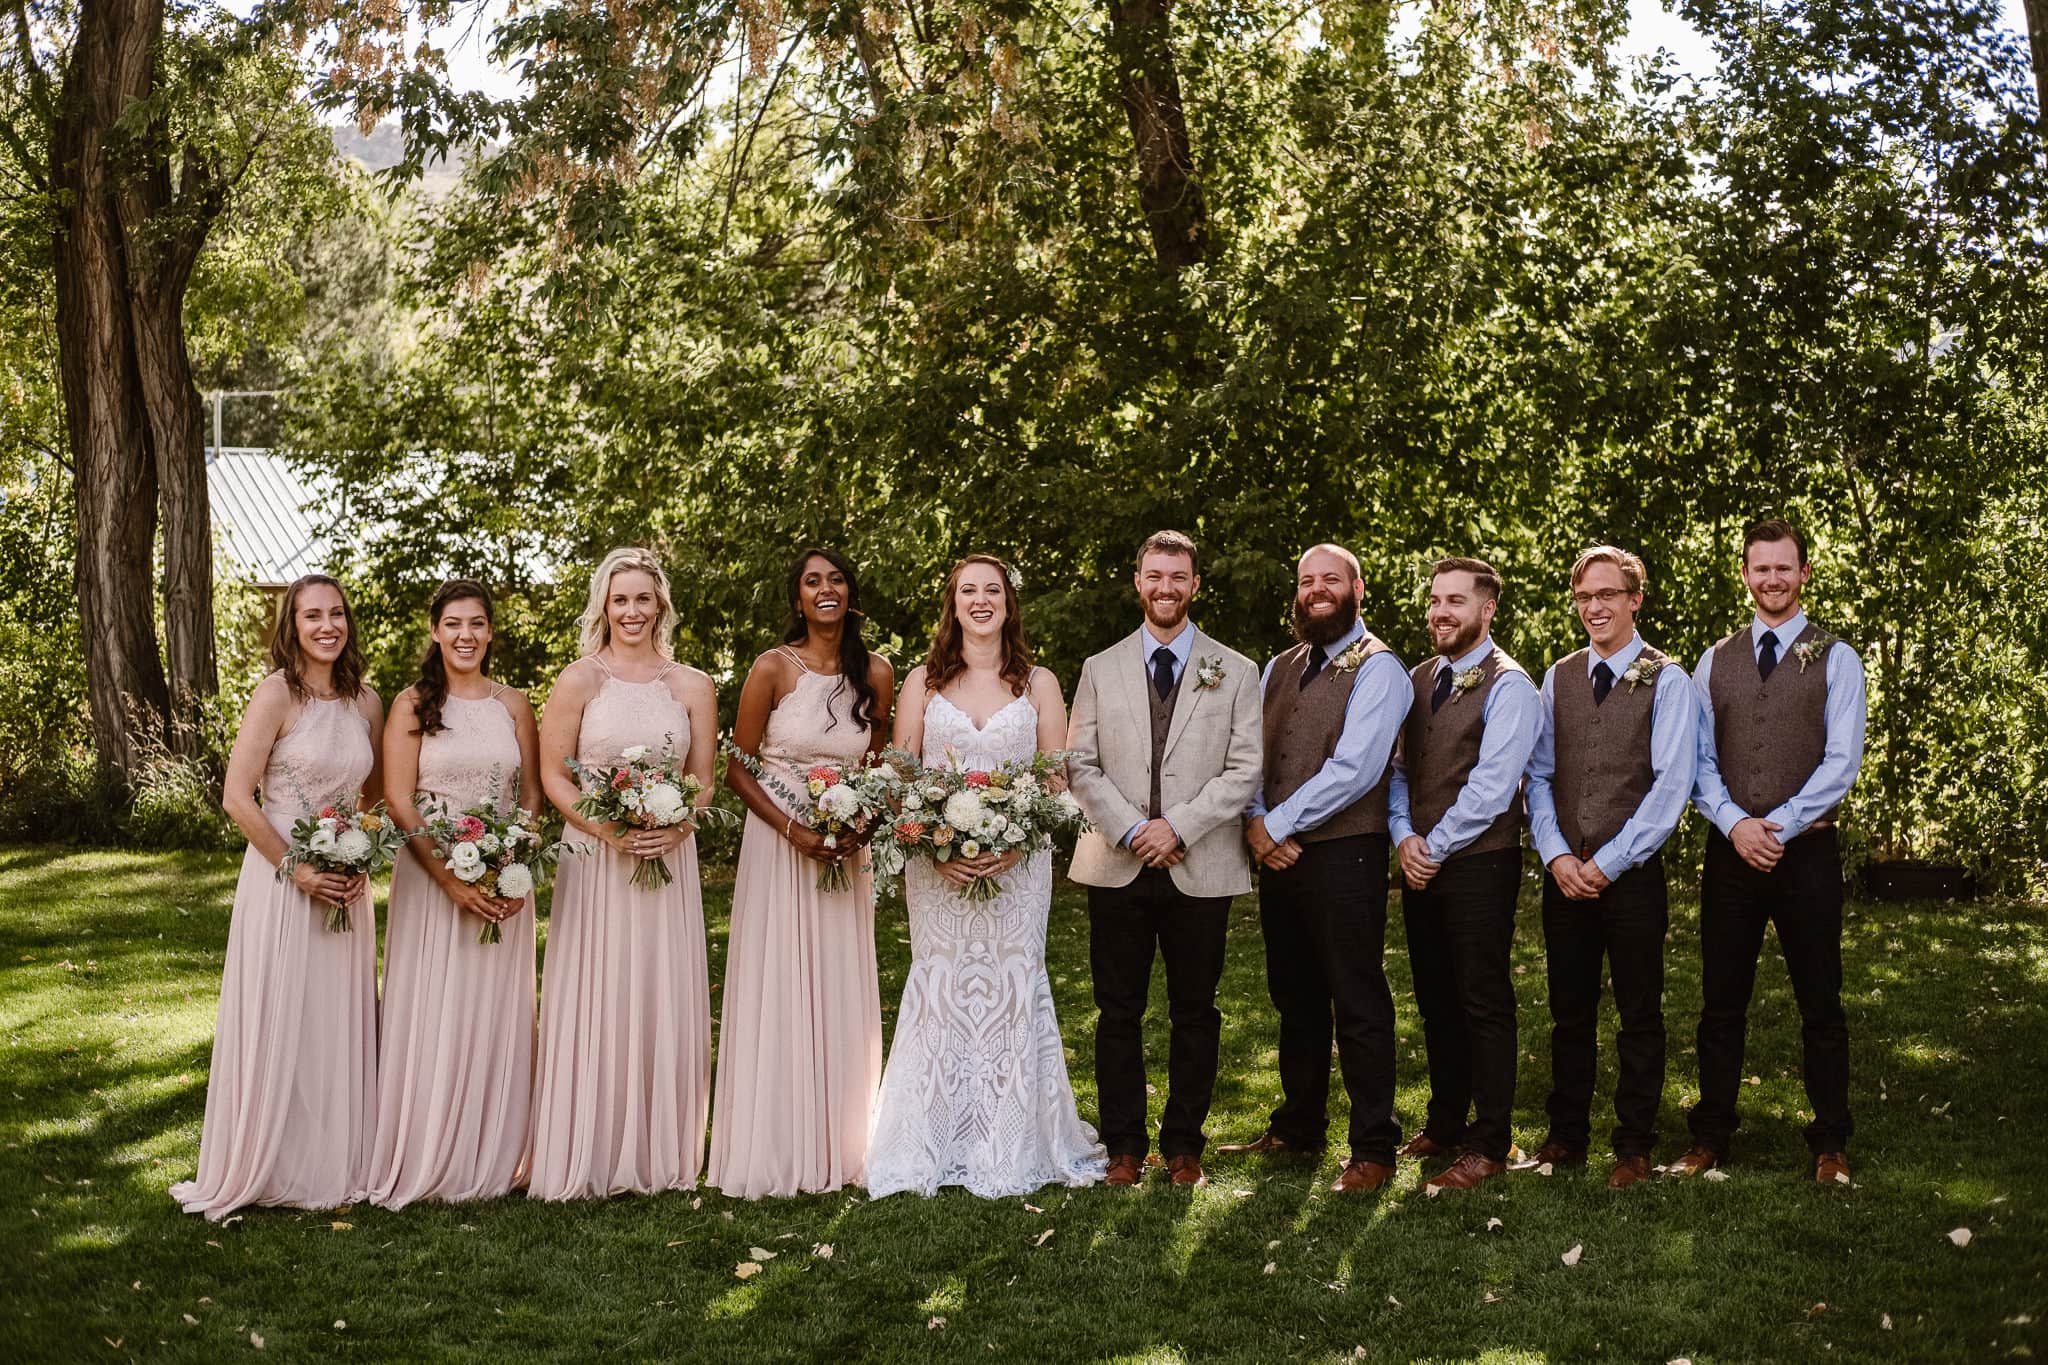 Lyons Farmette wedding photographer, Colorado intimate wedding photographer, wedding party photo, bridesmaids in dusty pink dresses, groomsmen wearing vests